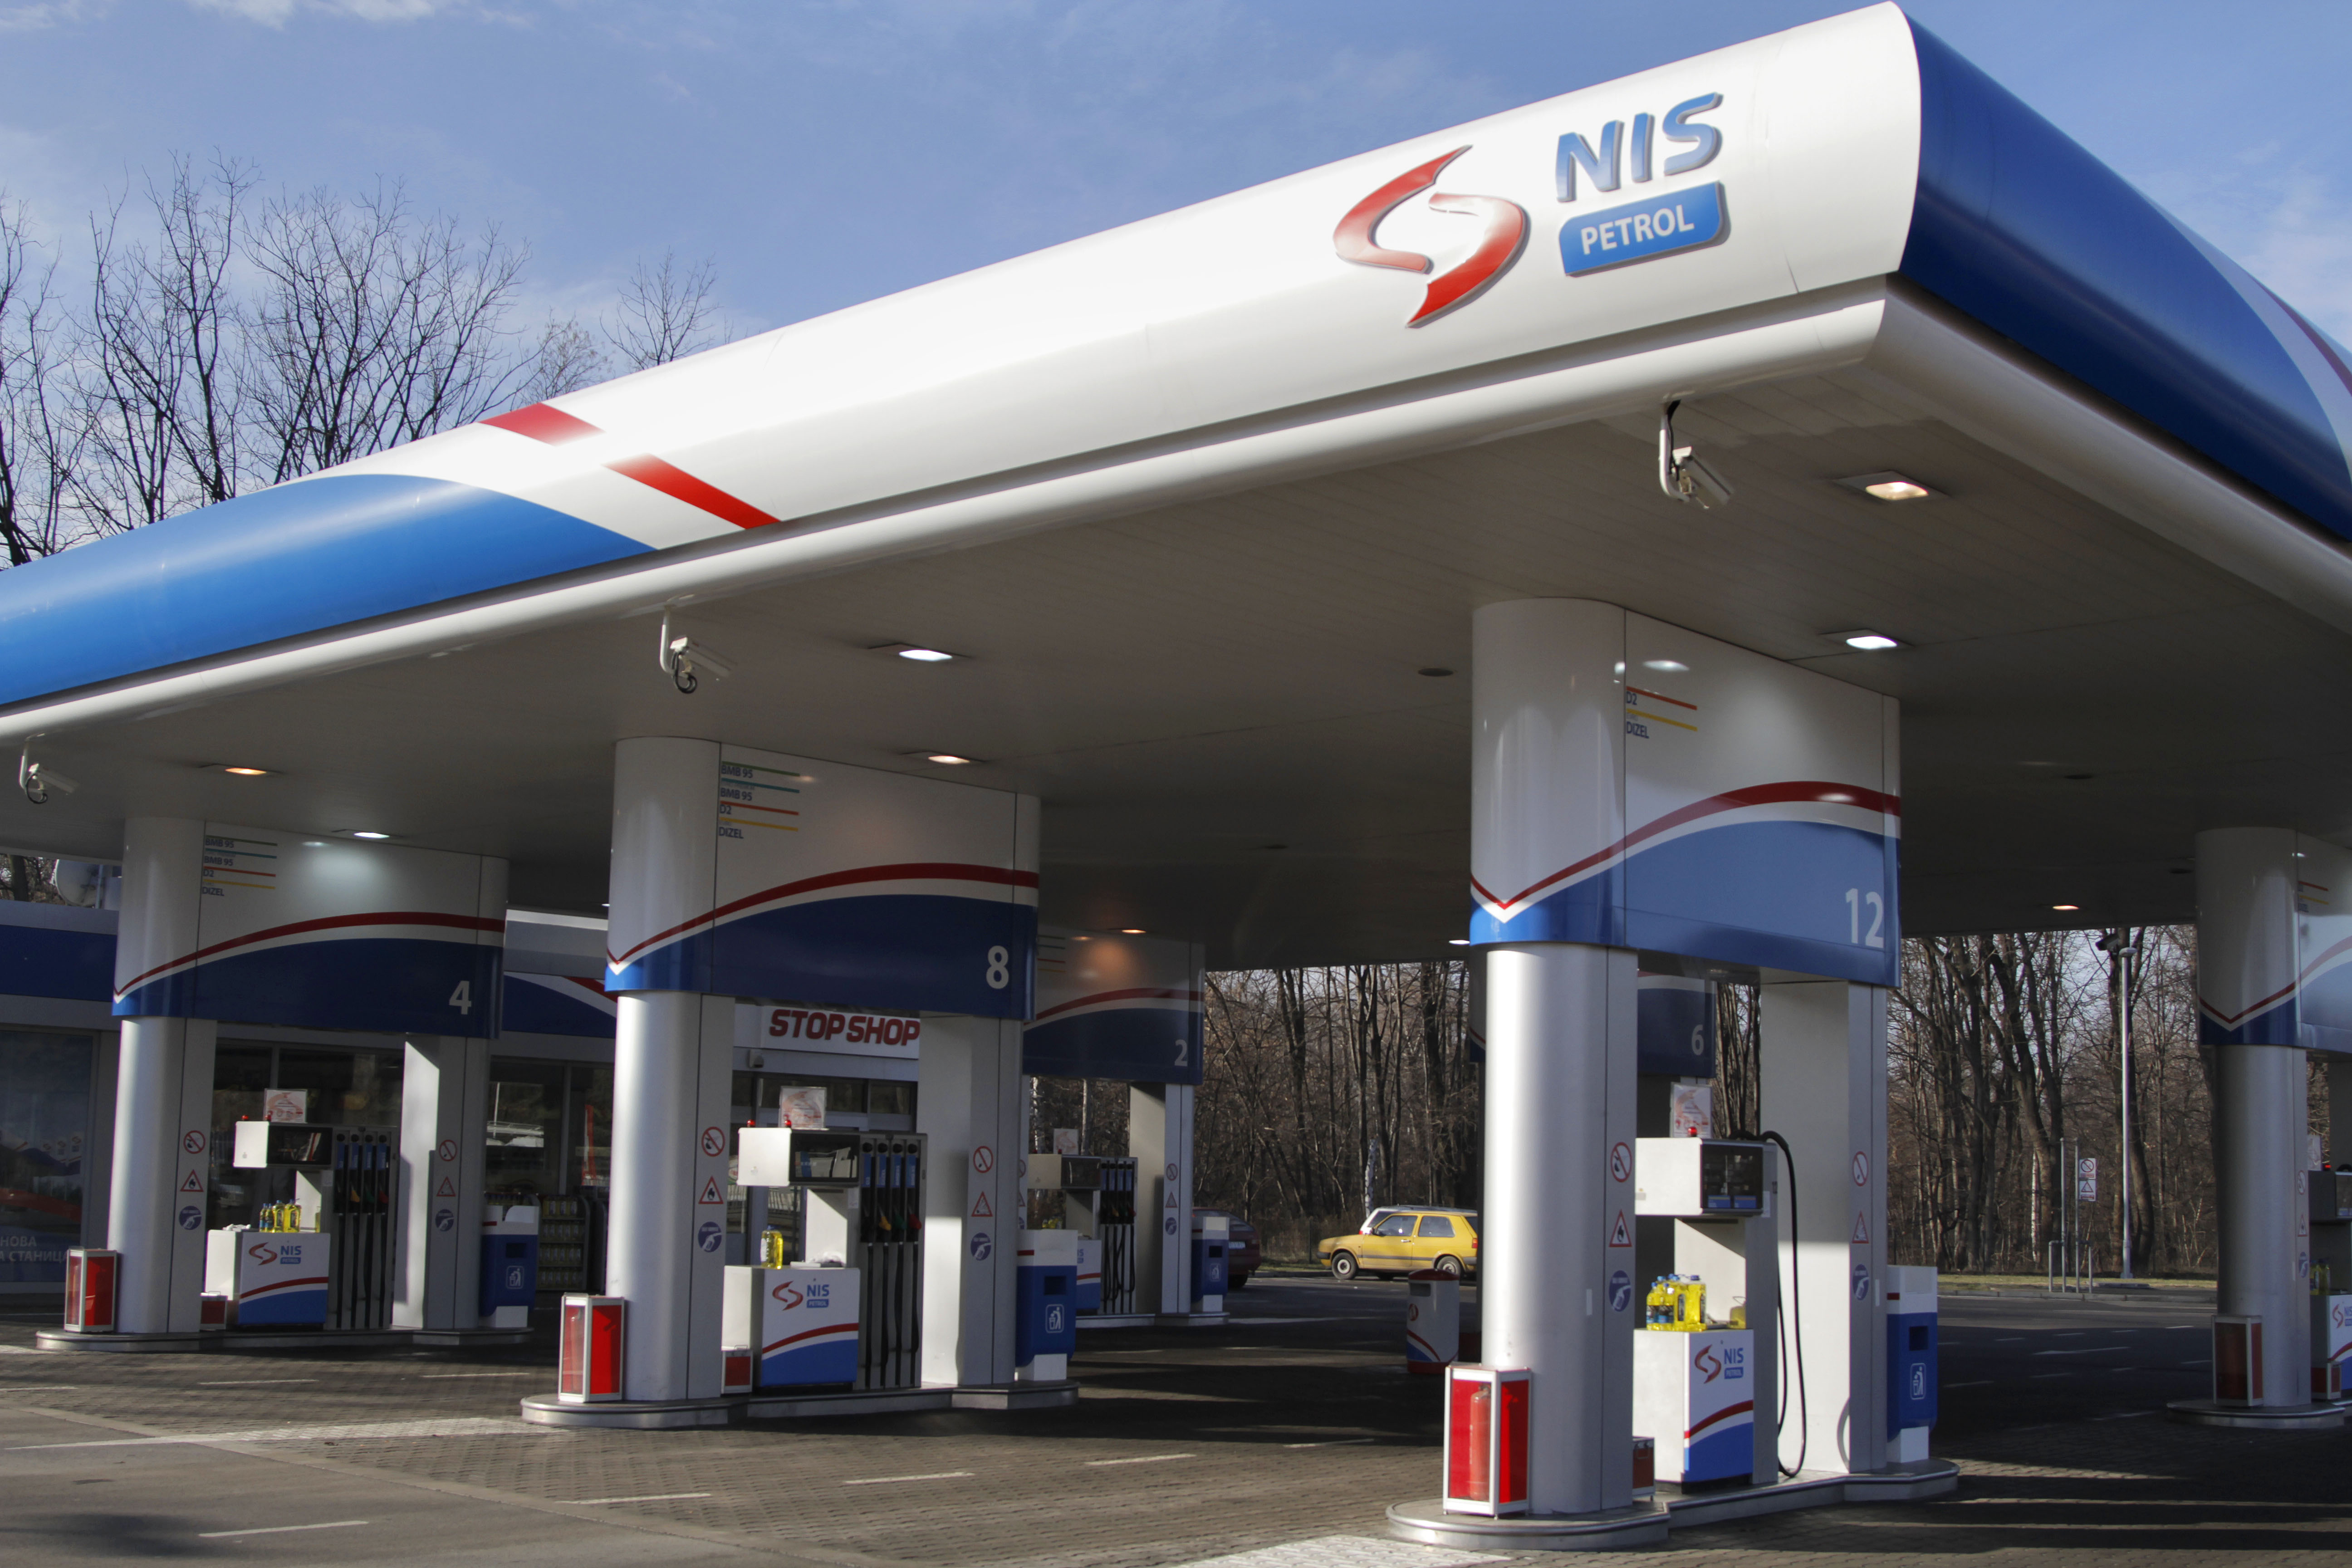 File:NIS Petrol station.jpg - Wikimedia Commons